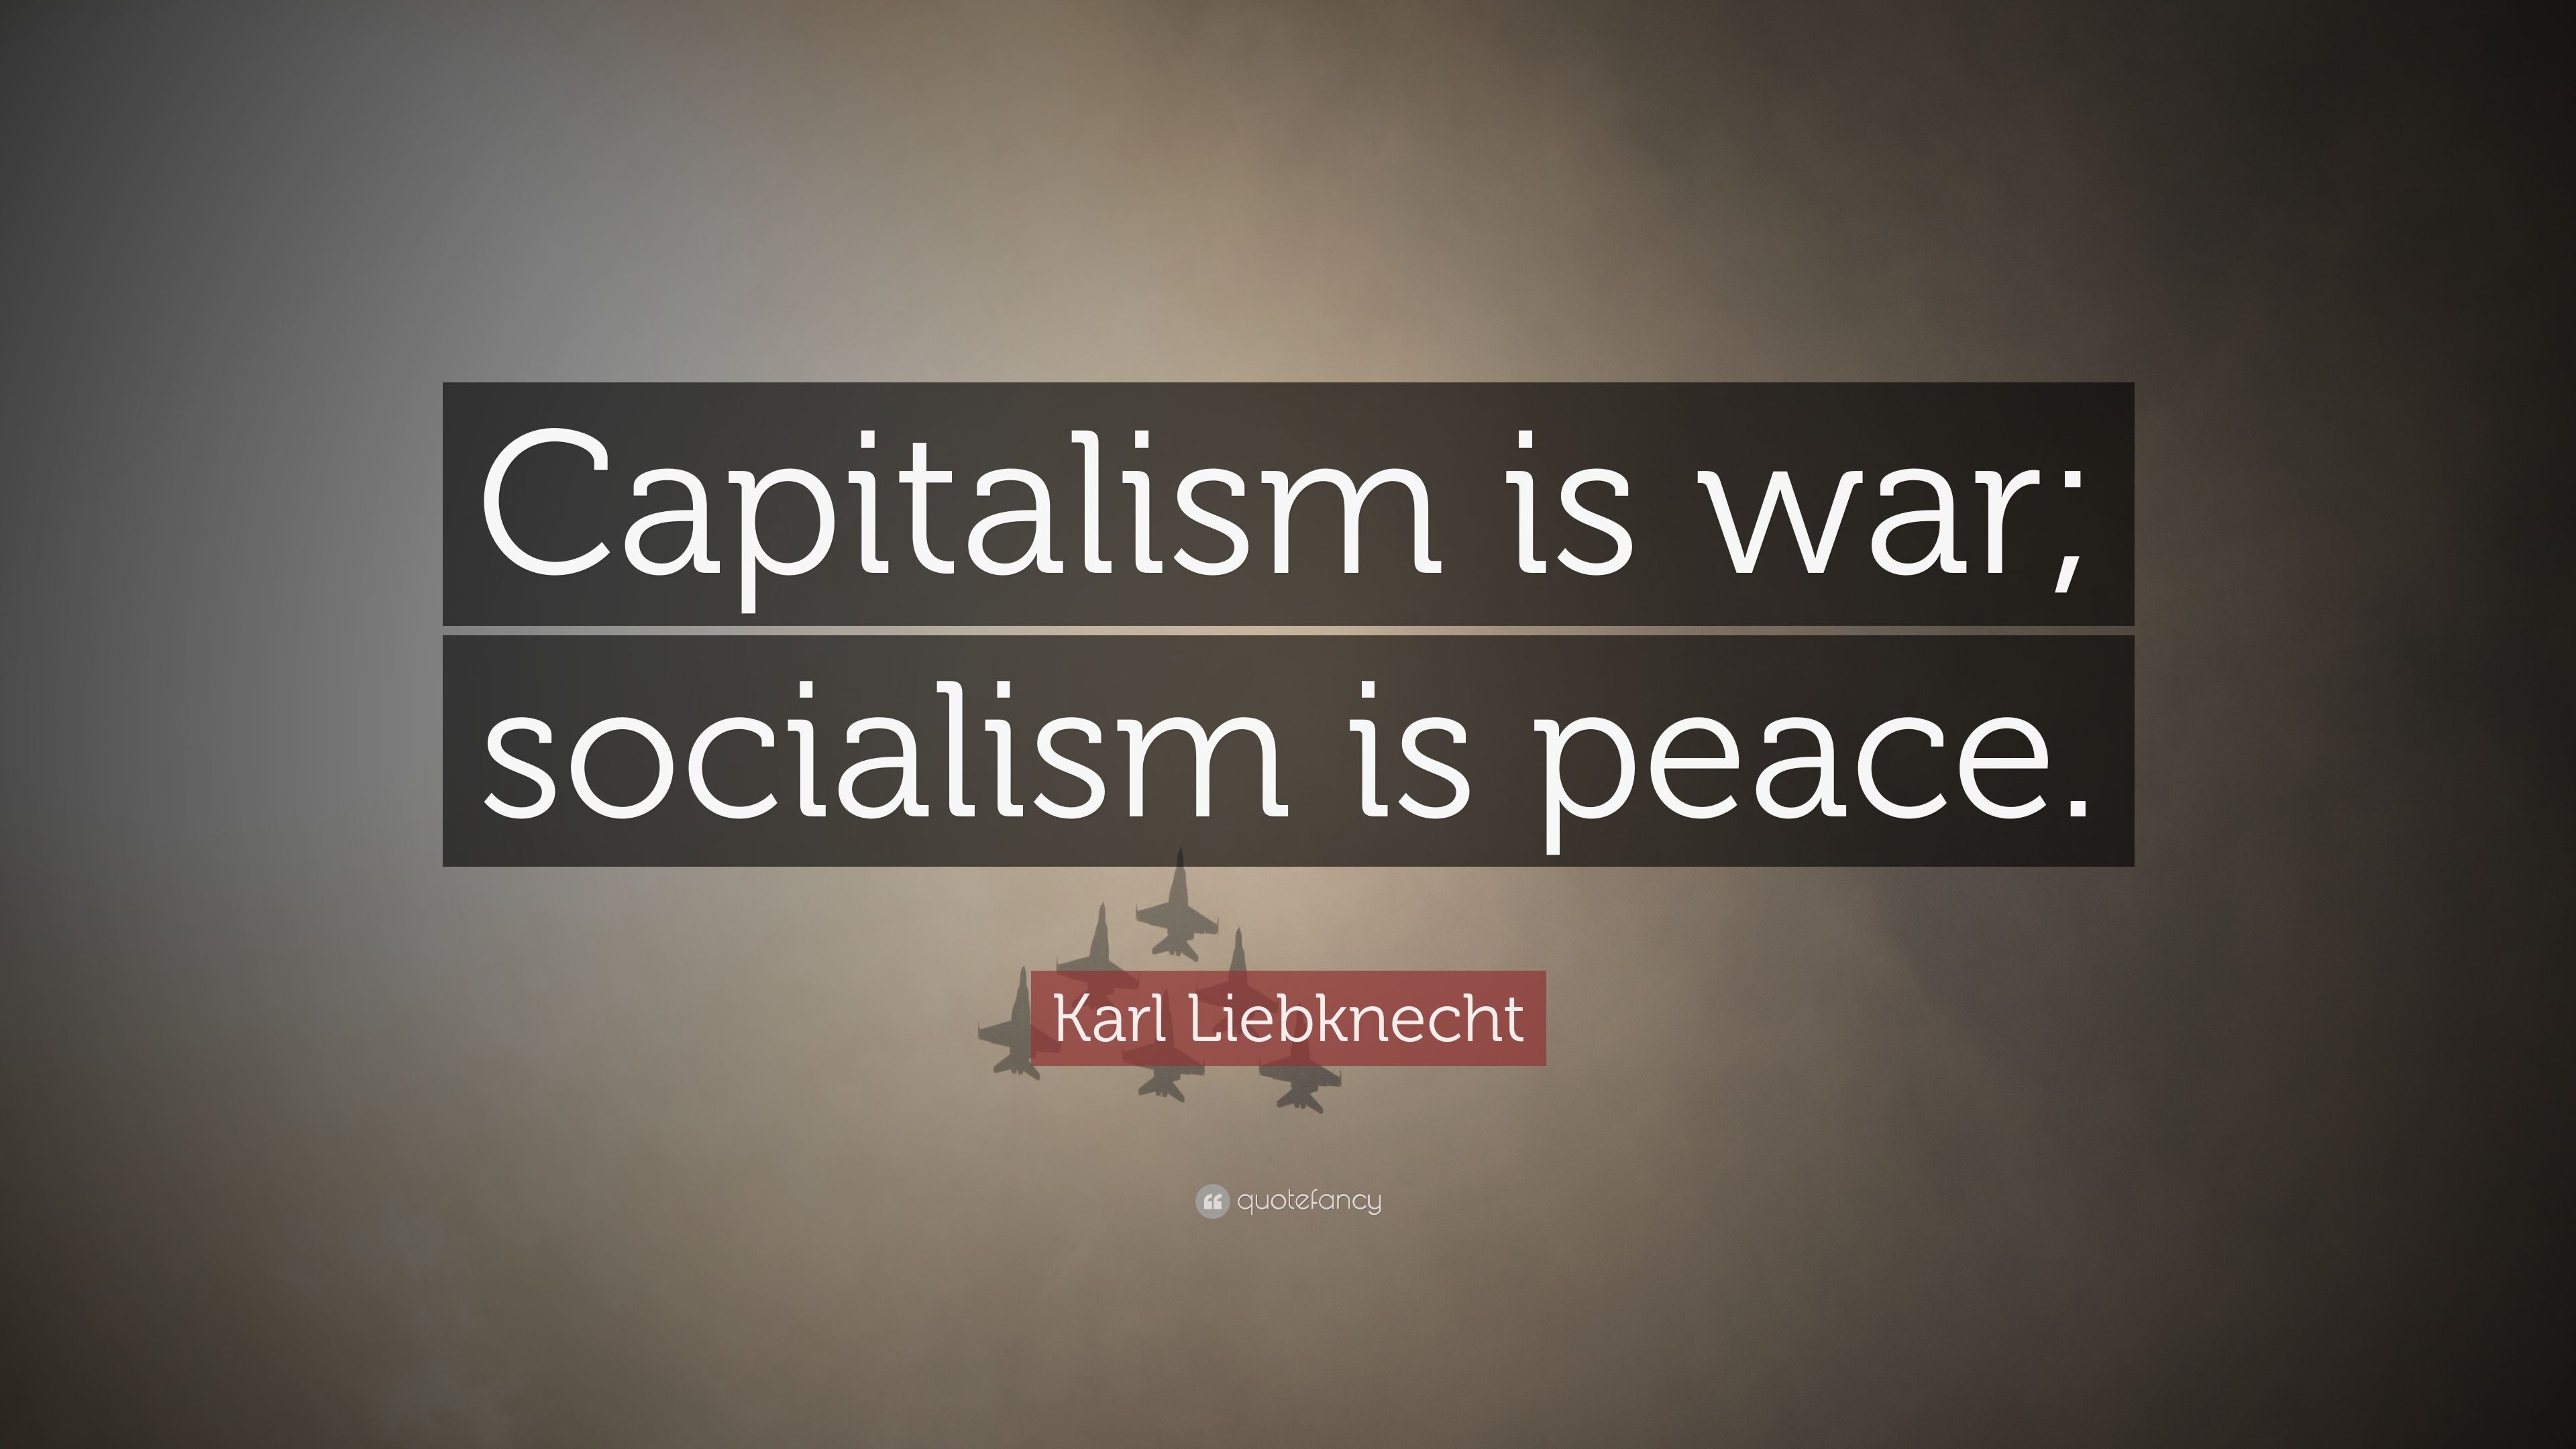 Karl Liebknecht Quote: “Capitalism is war; socialism is peace.” (10 wallpaper)